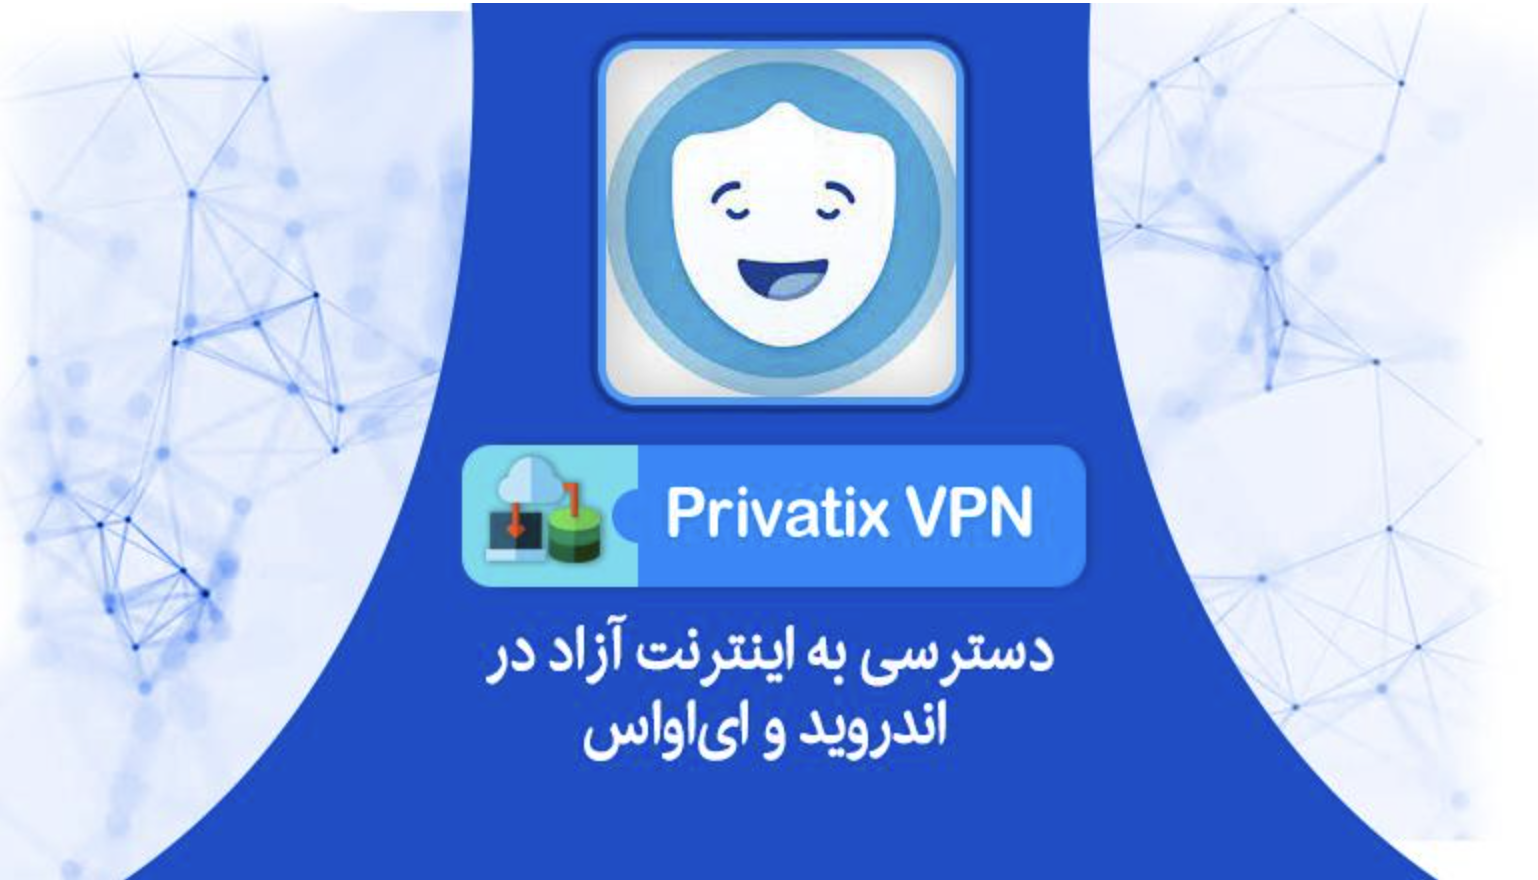 Provatix VPn